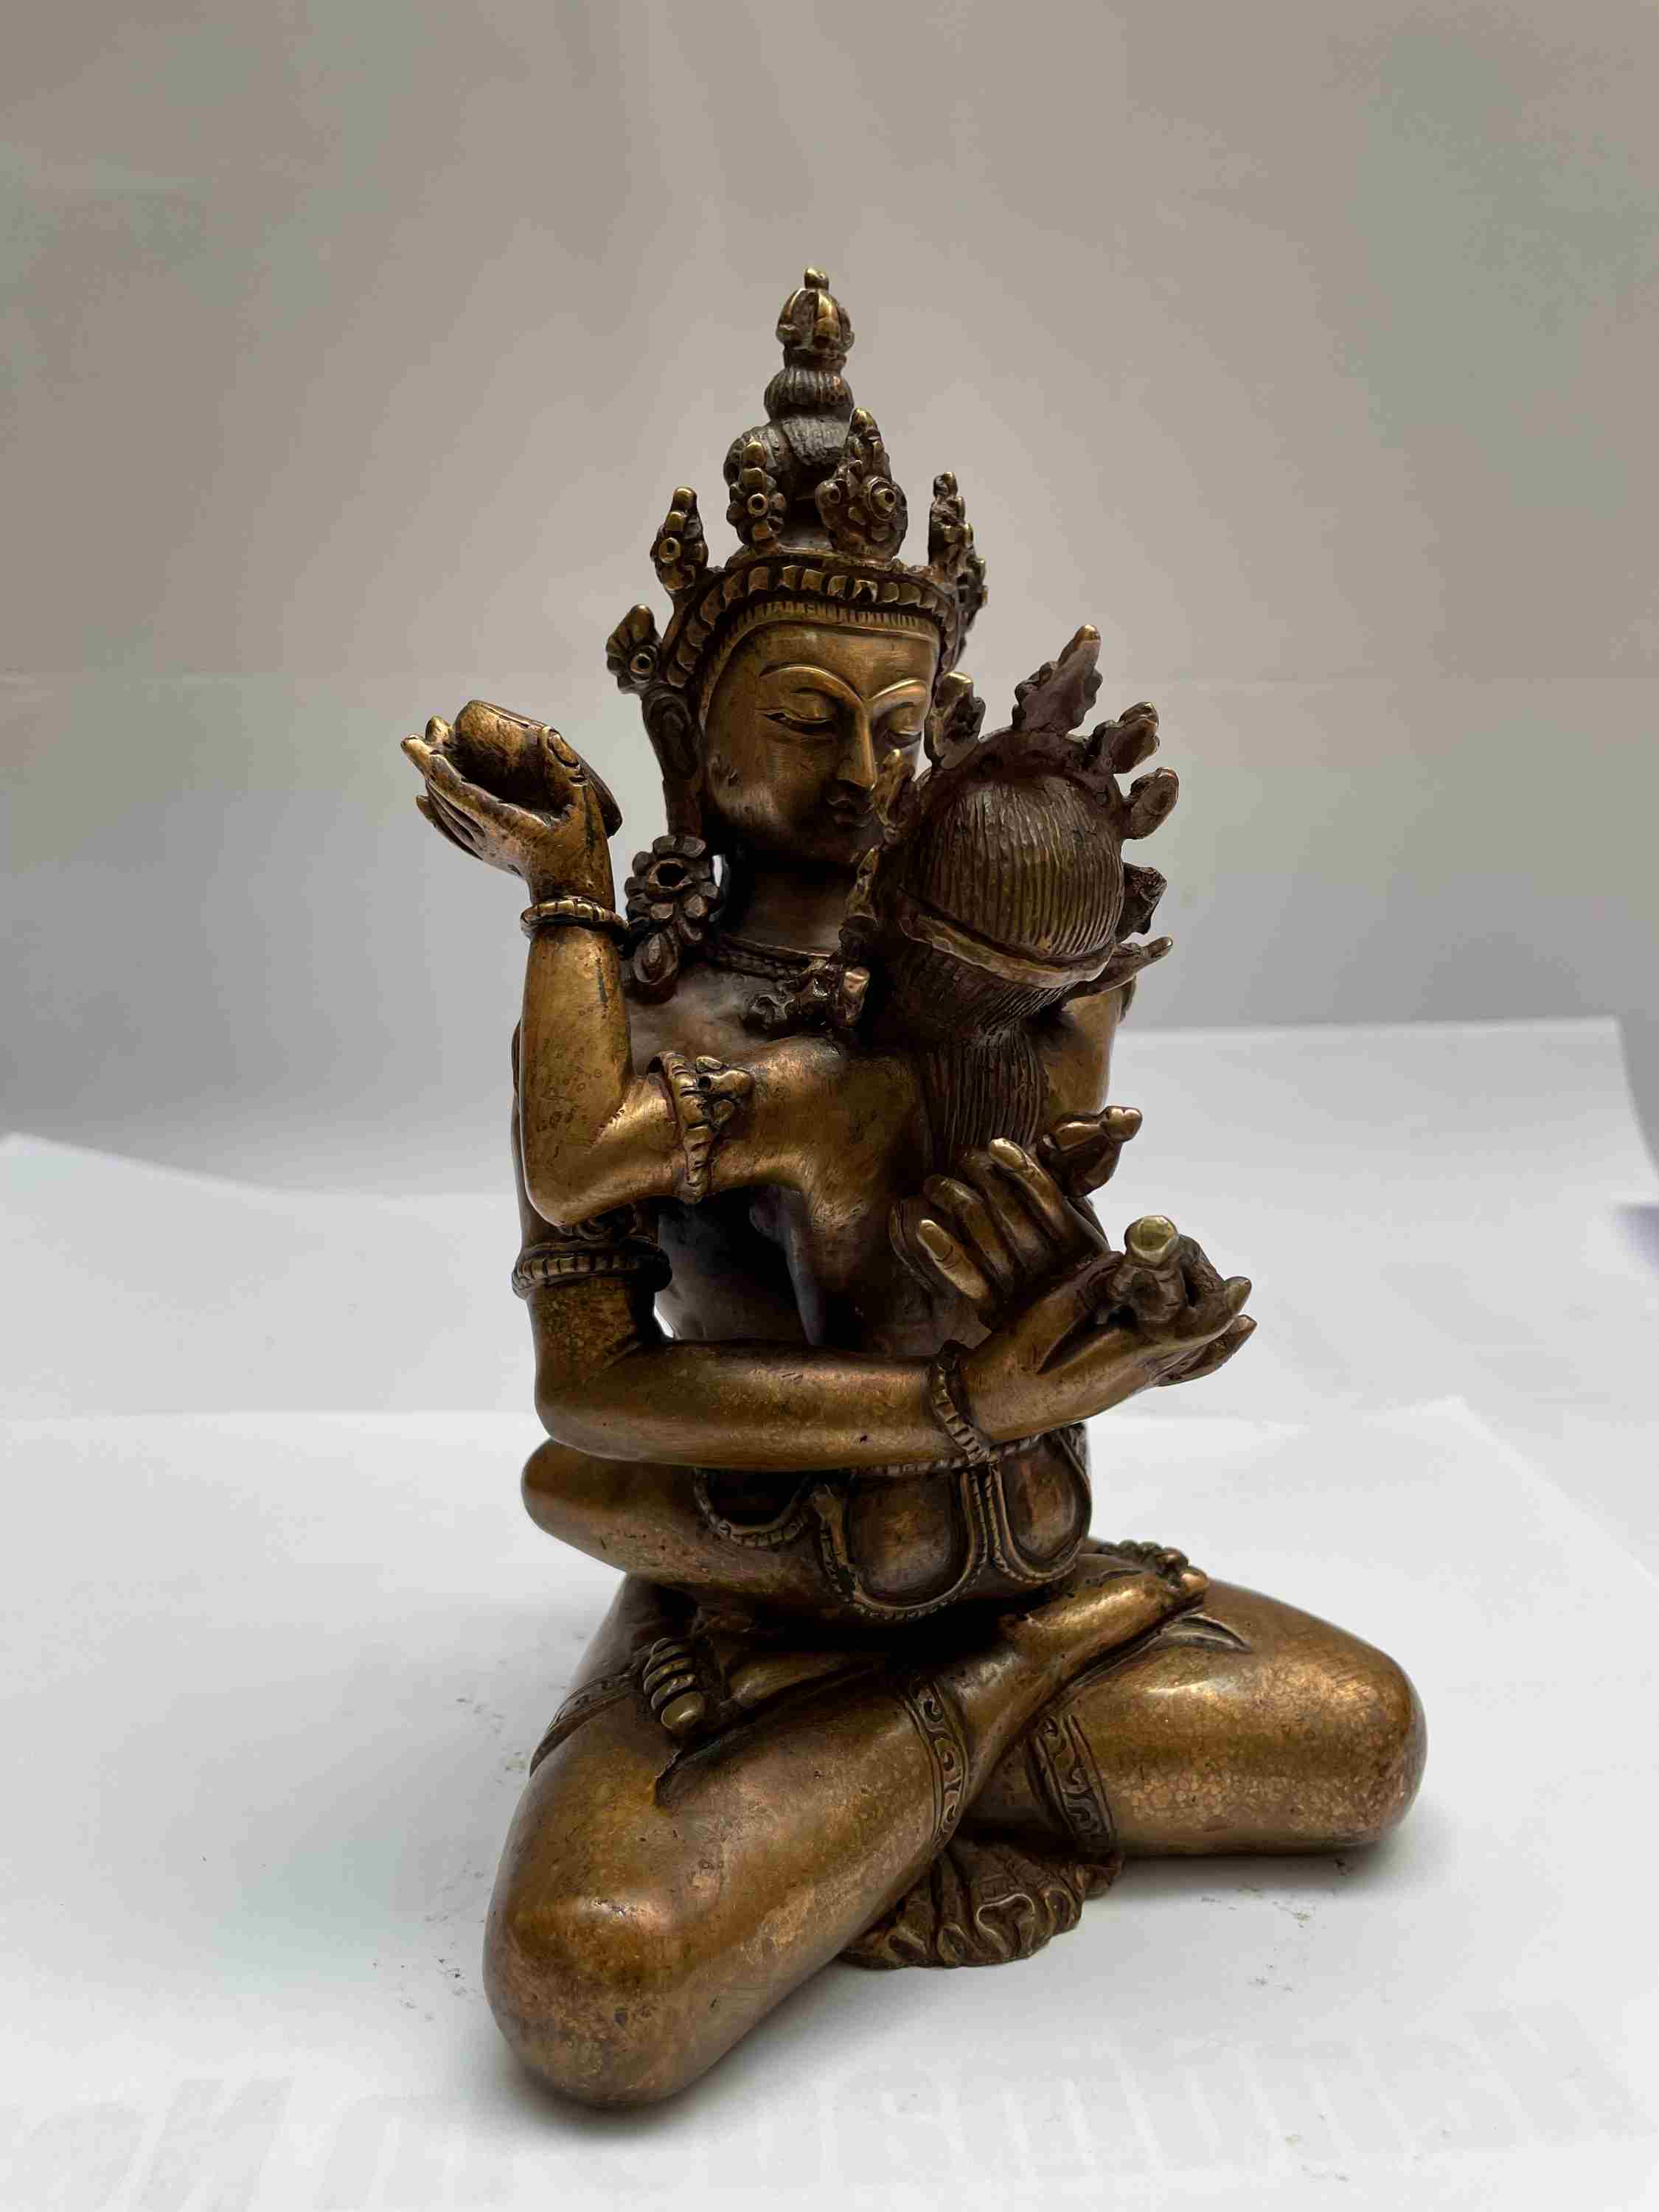 Buddhist Handmade Statue Of Vajradhara With Consort, shakti, Yab-yum, full Gold Plated, Antique Finishing